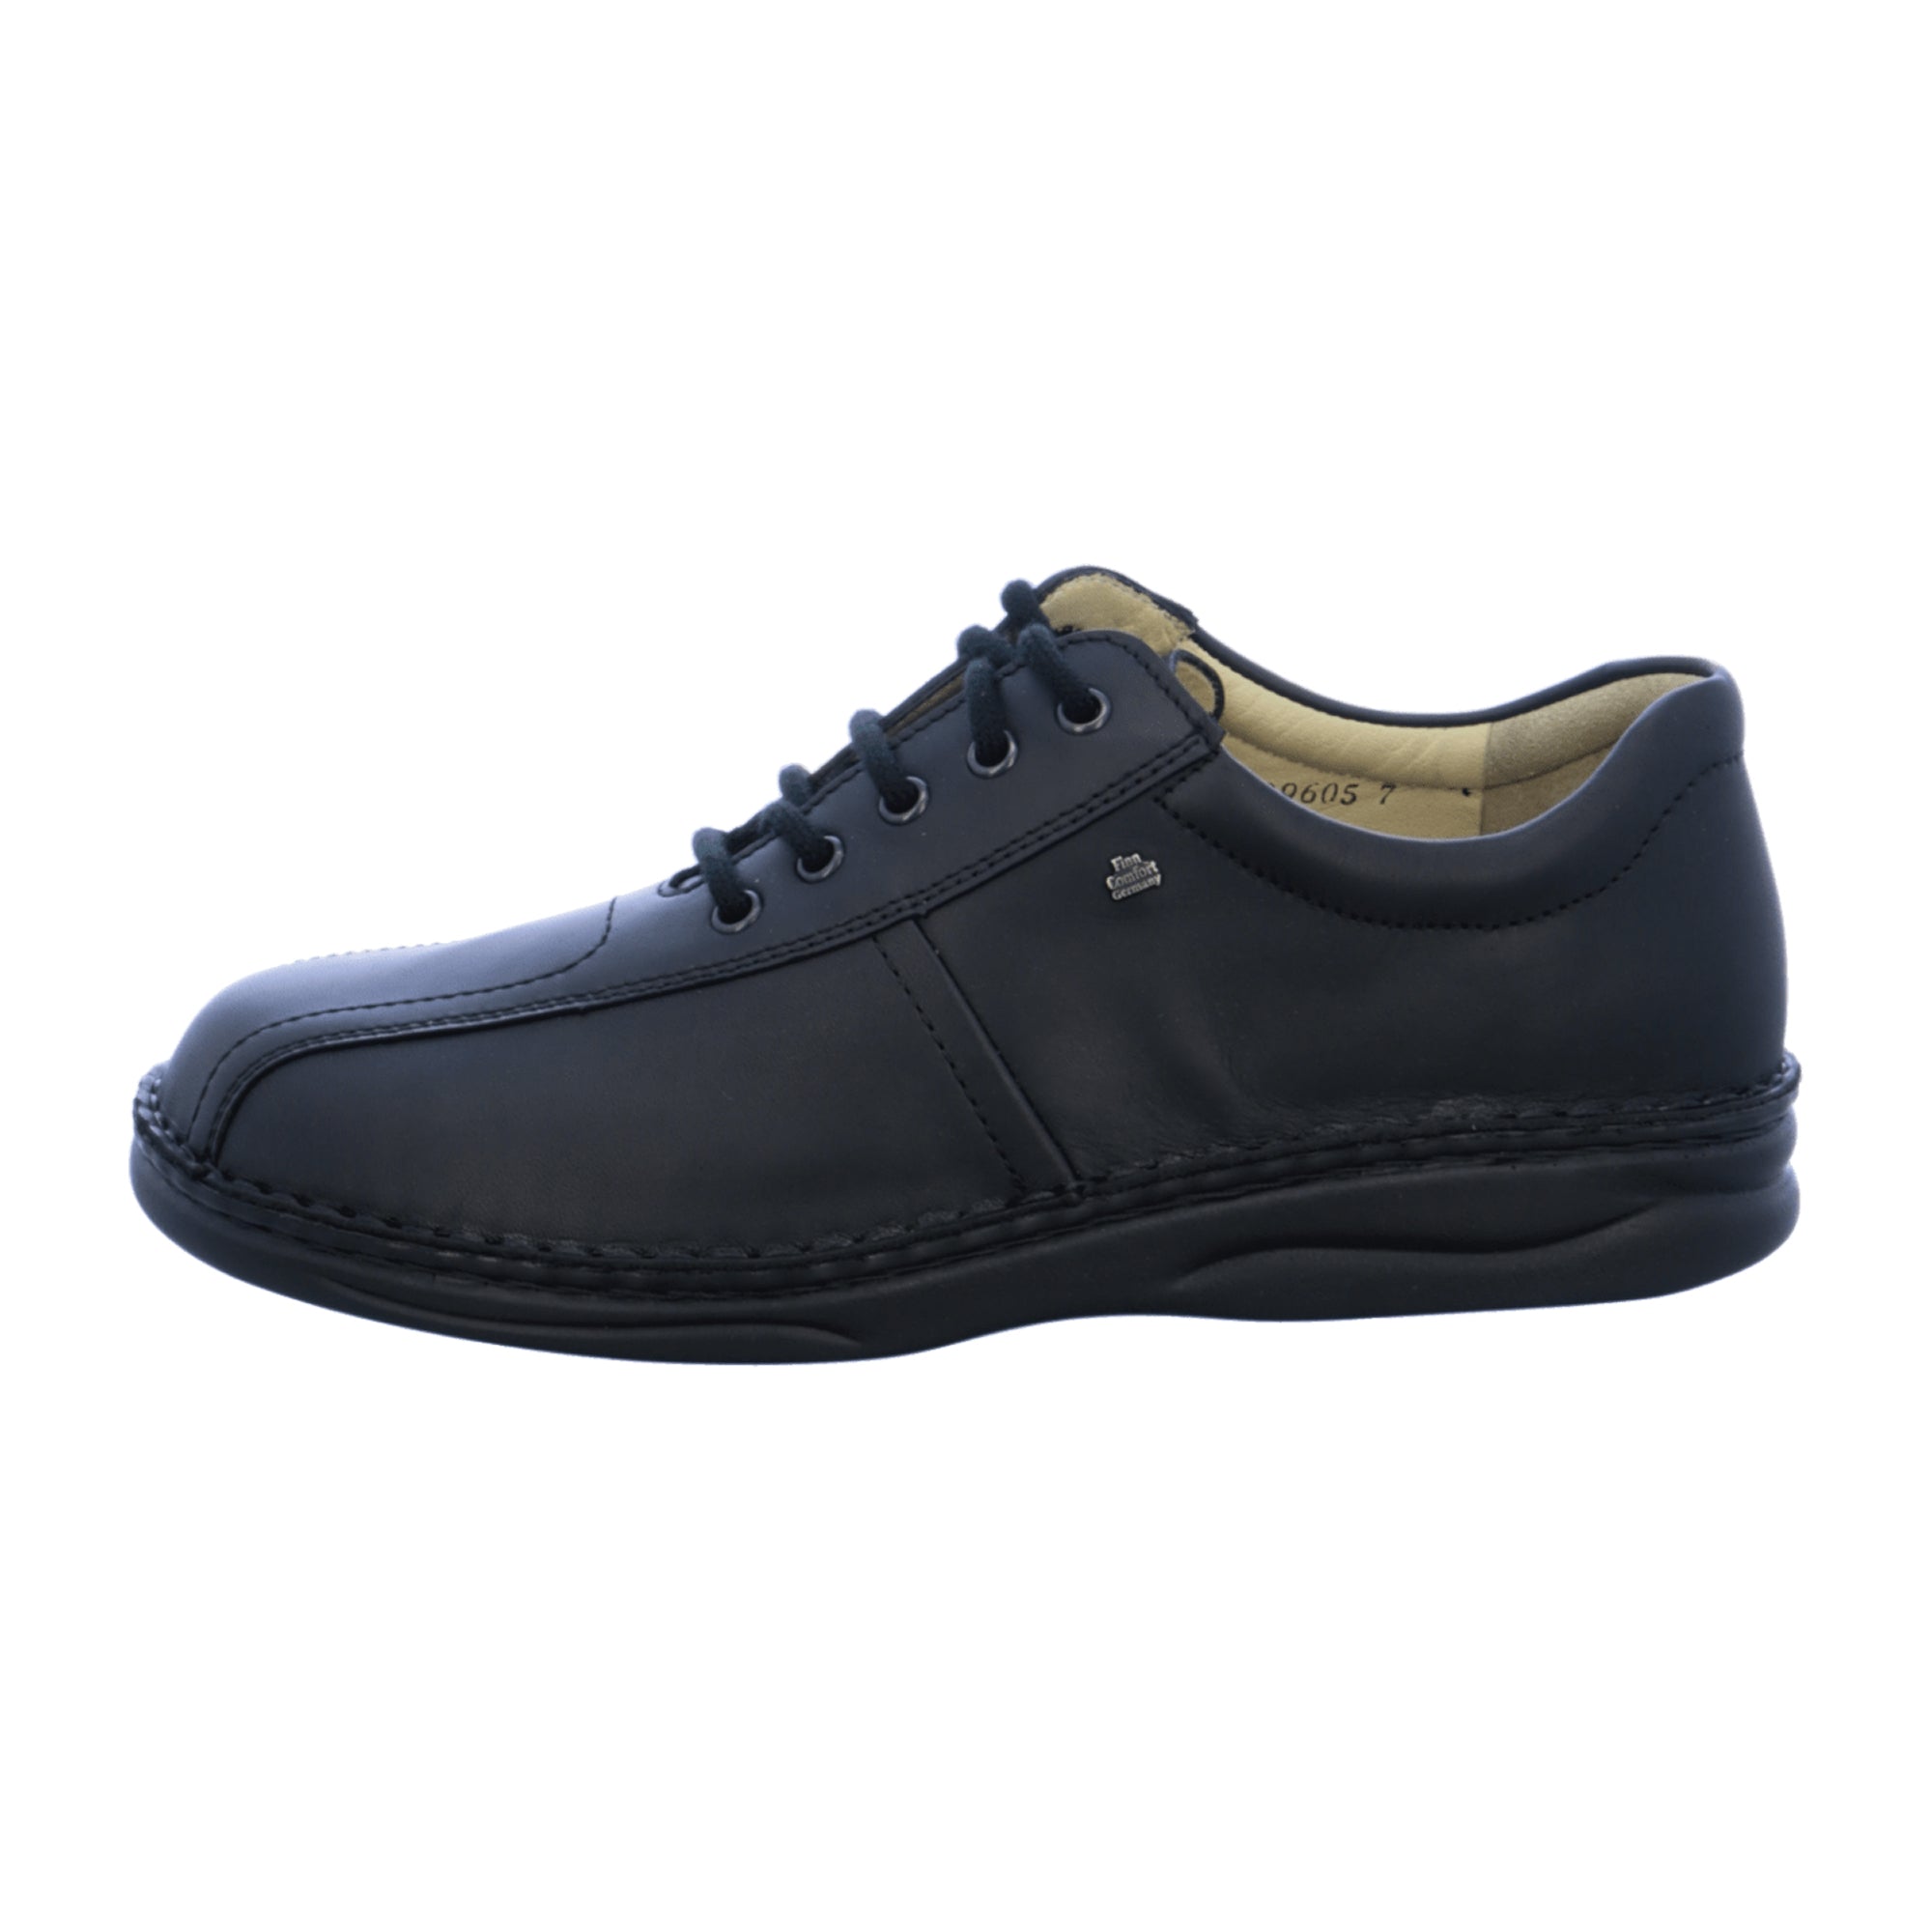 Finn Comfort Men's Orthopedic Shoes 1101-062099 in Black | Stylish & Durable